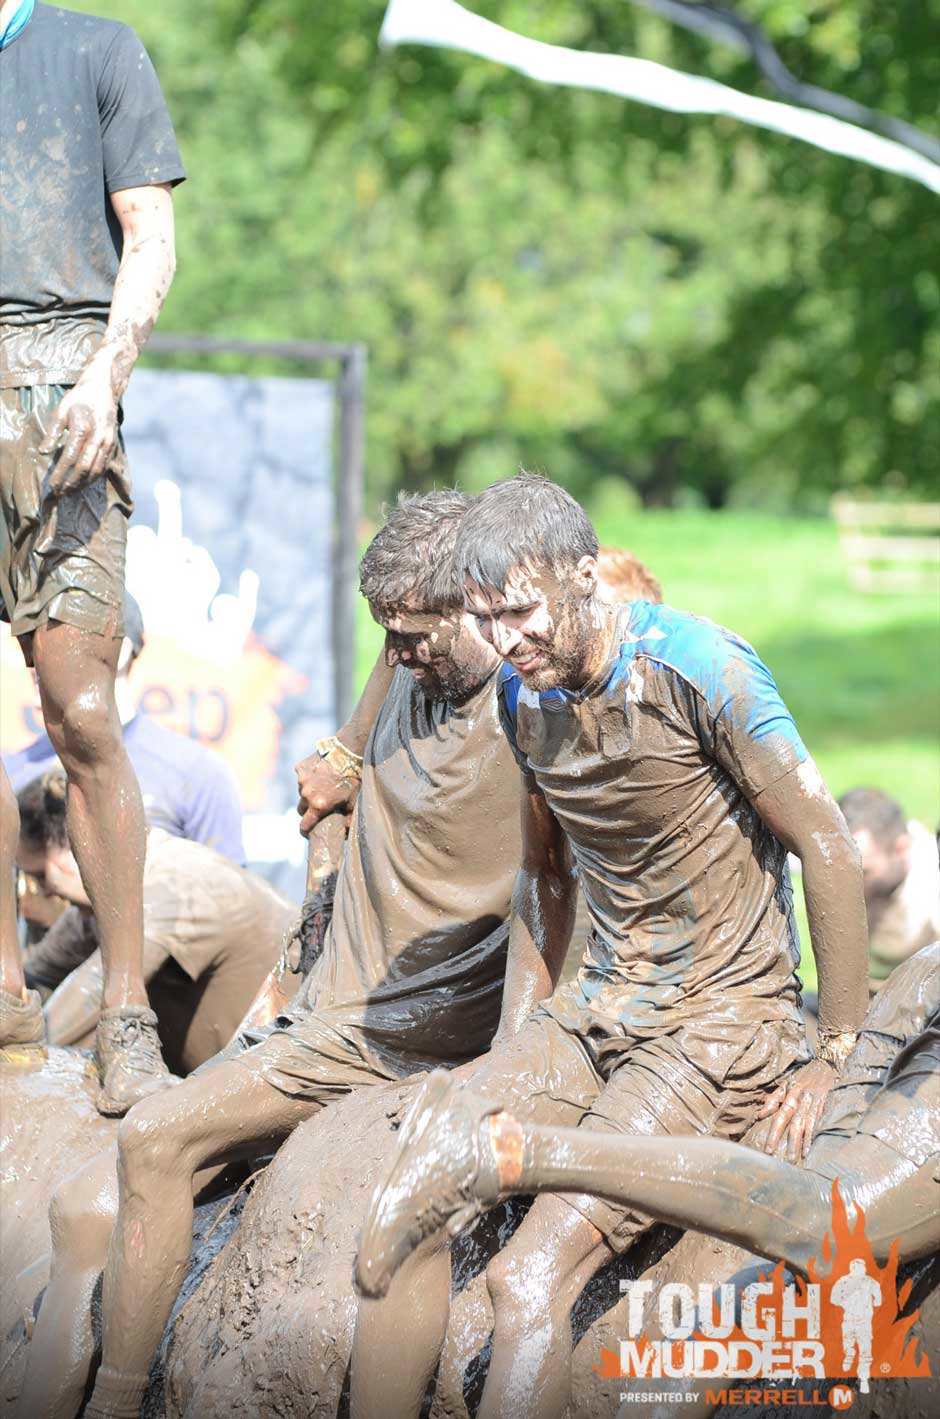 Muddy slide!